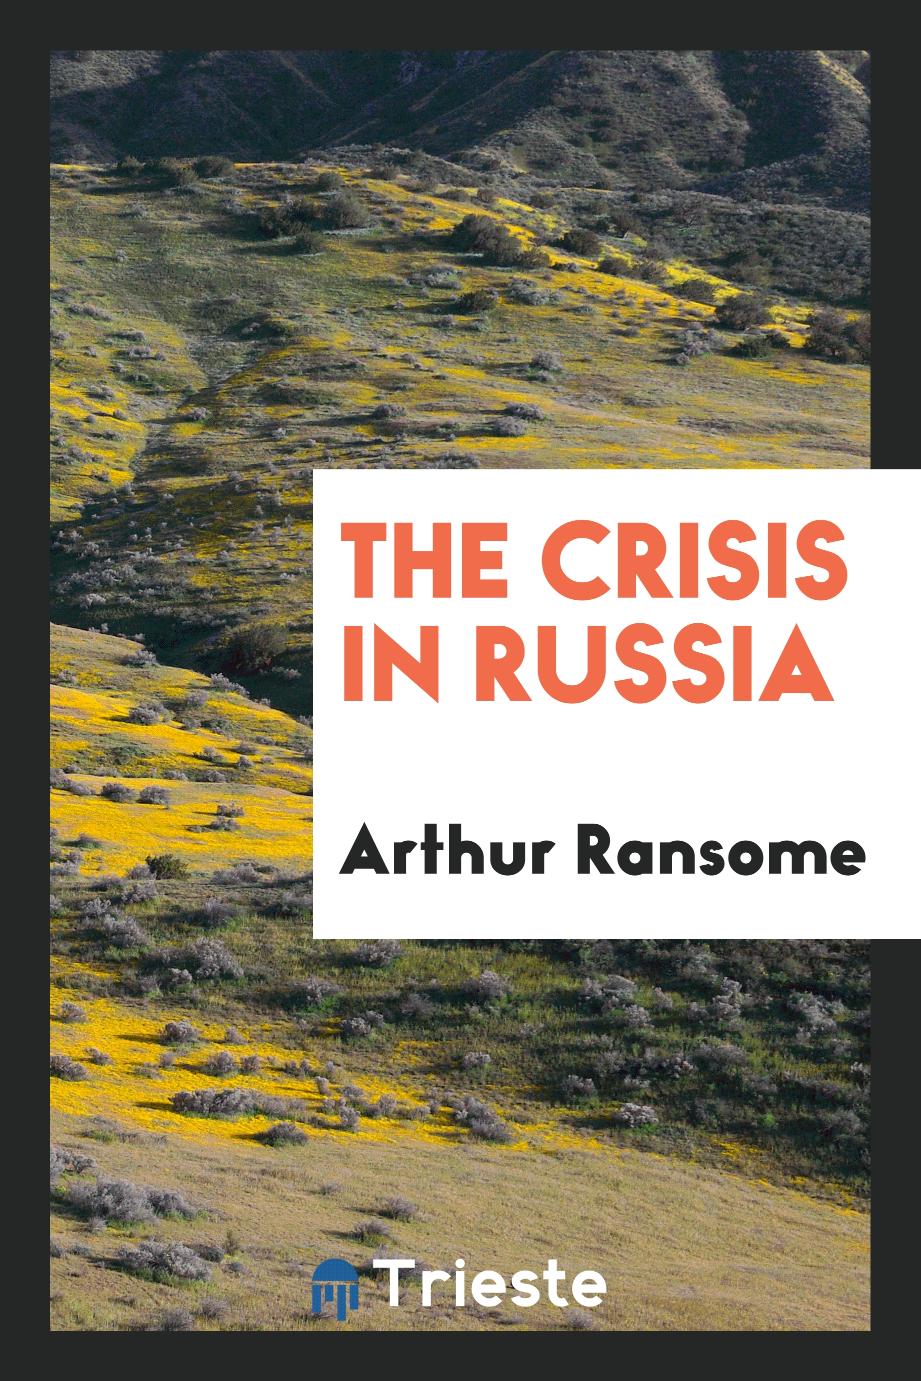 The crisis in Russia